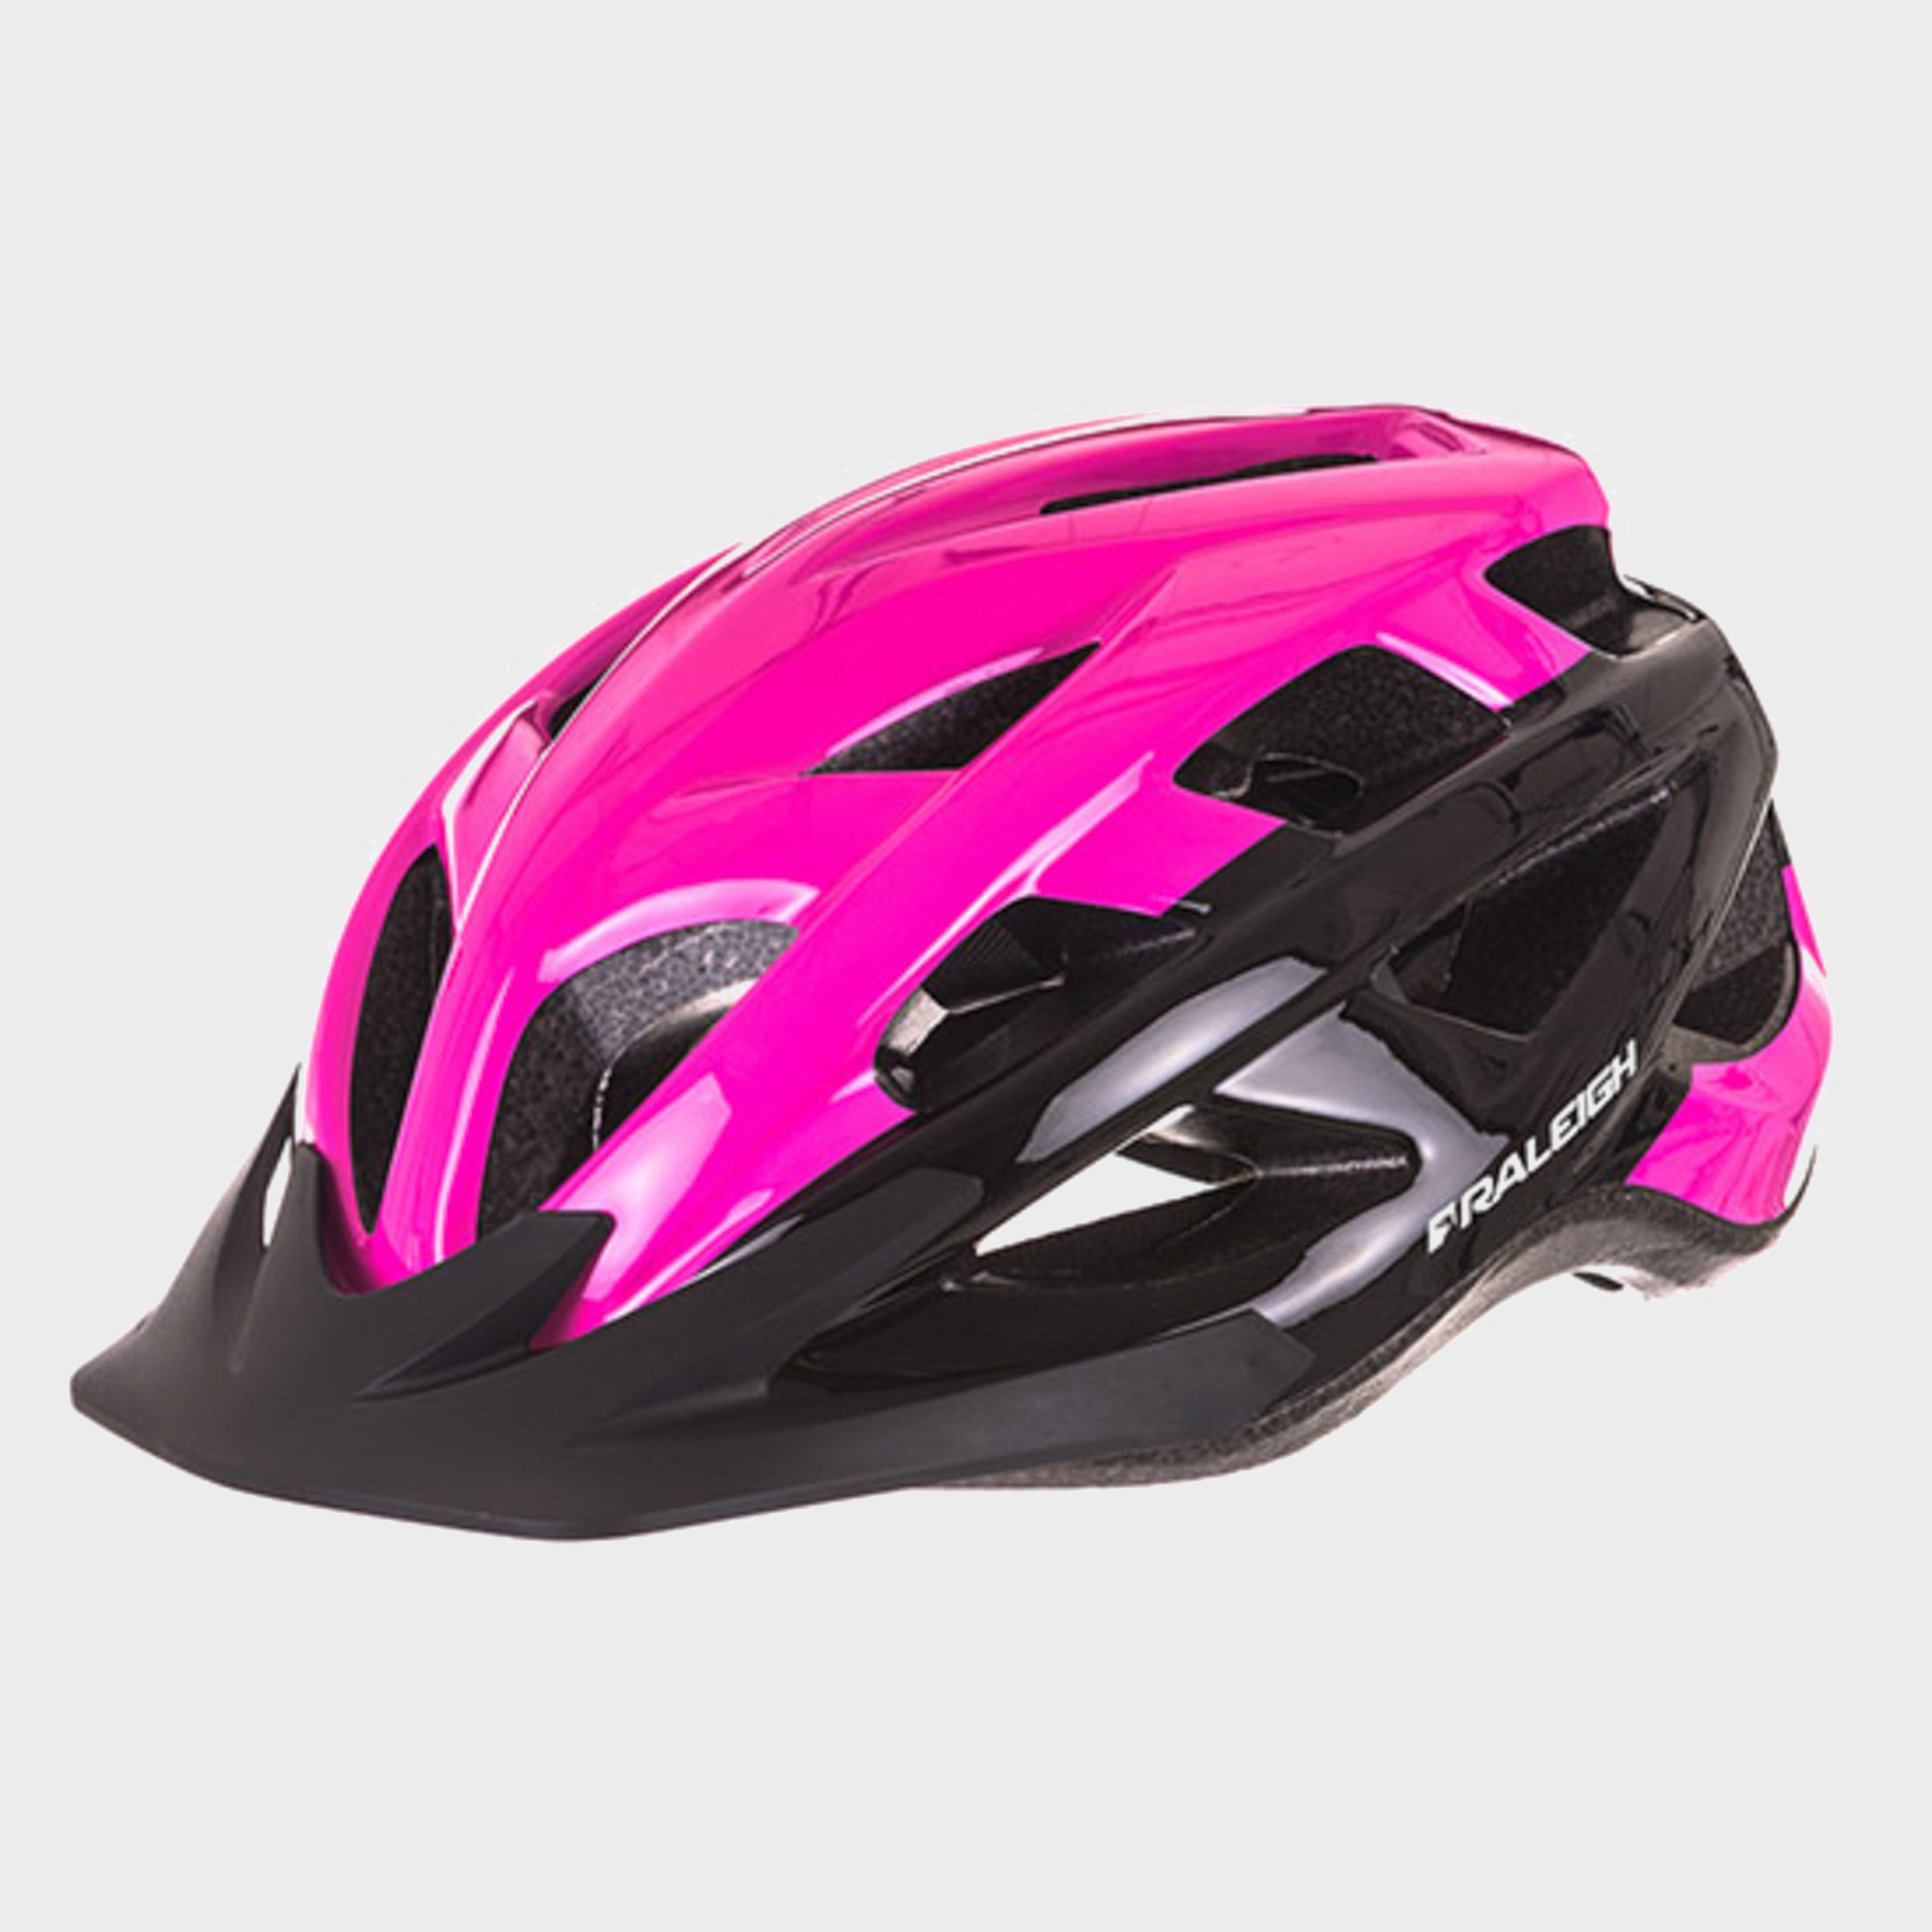 Raleigh Quest Cycling Helmet - Pink/black  Pink/black